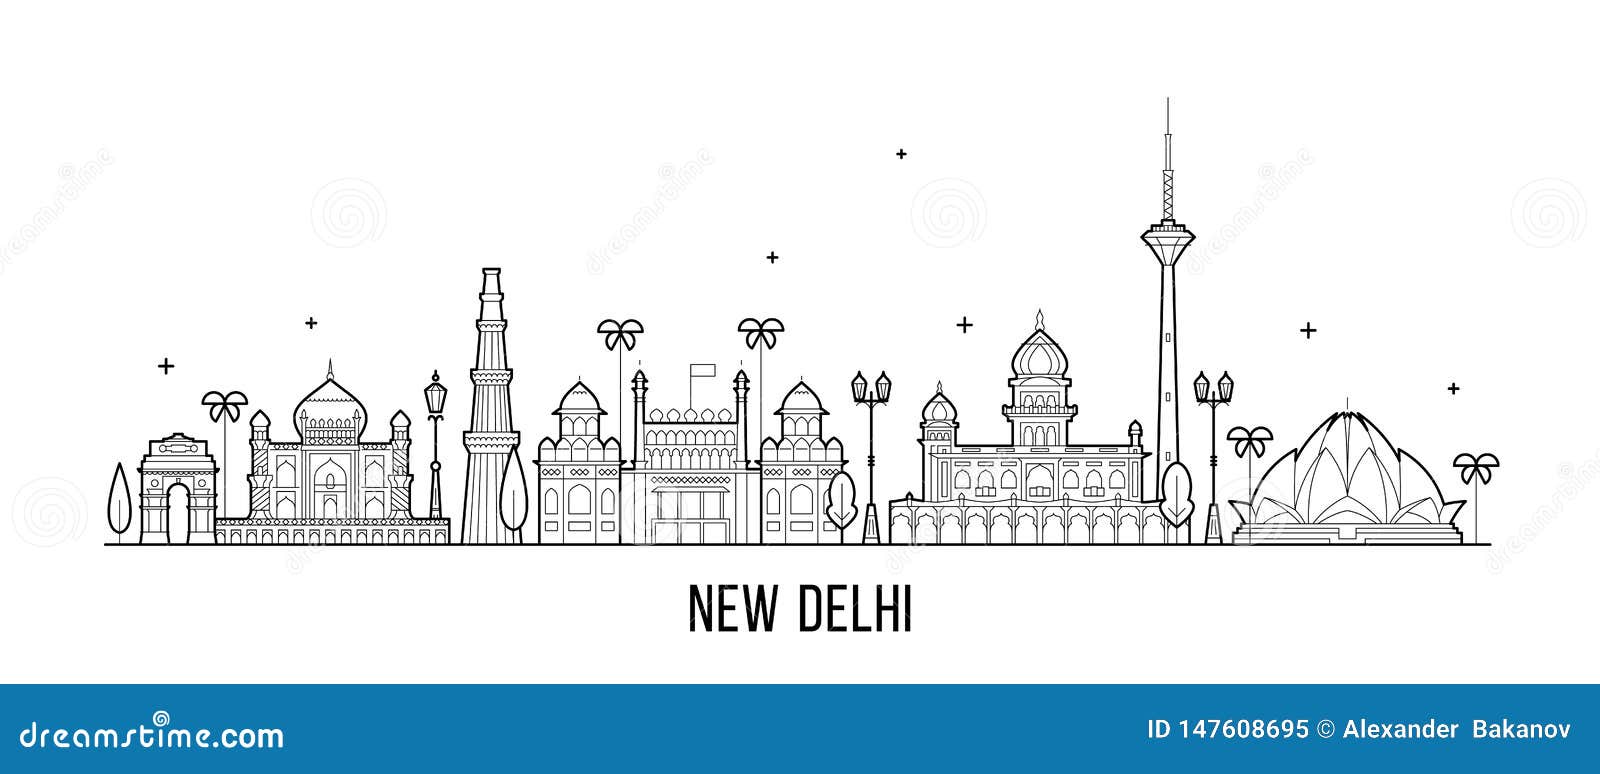 new delhi skyline india this city buildings 